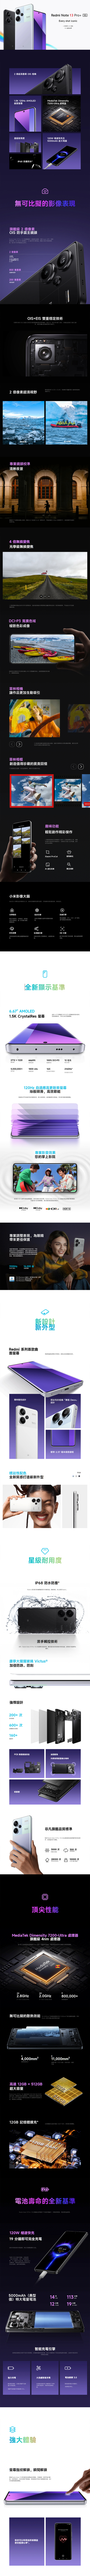 Xiaomi Redmi Note 13 Pro+ 5G